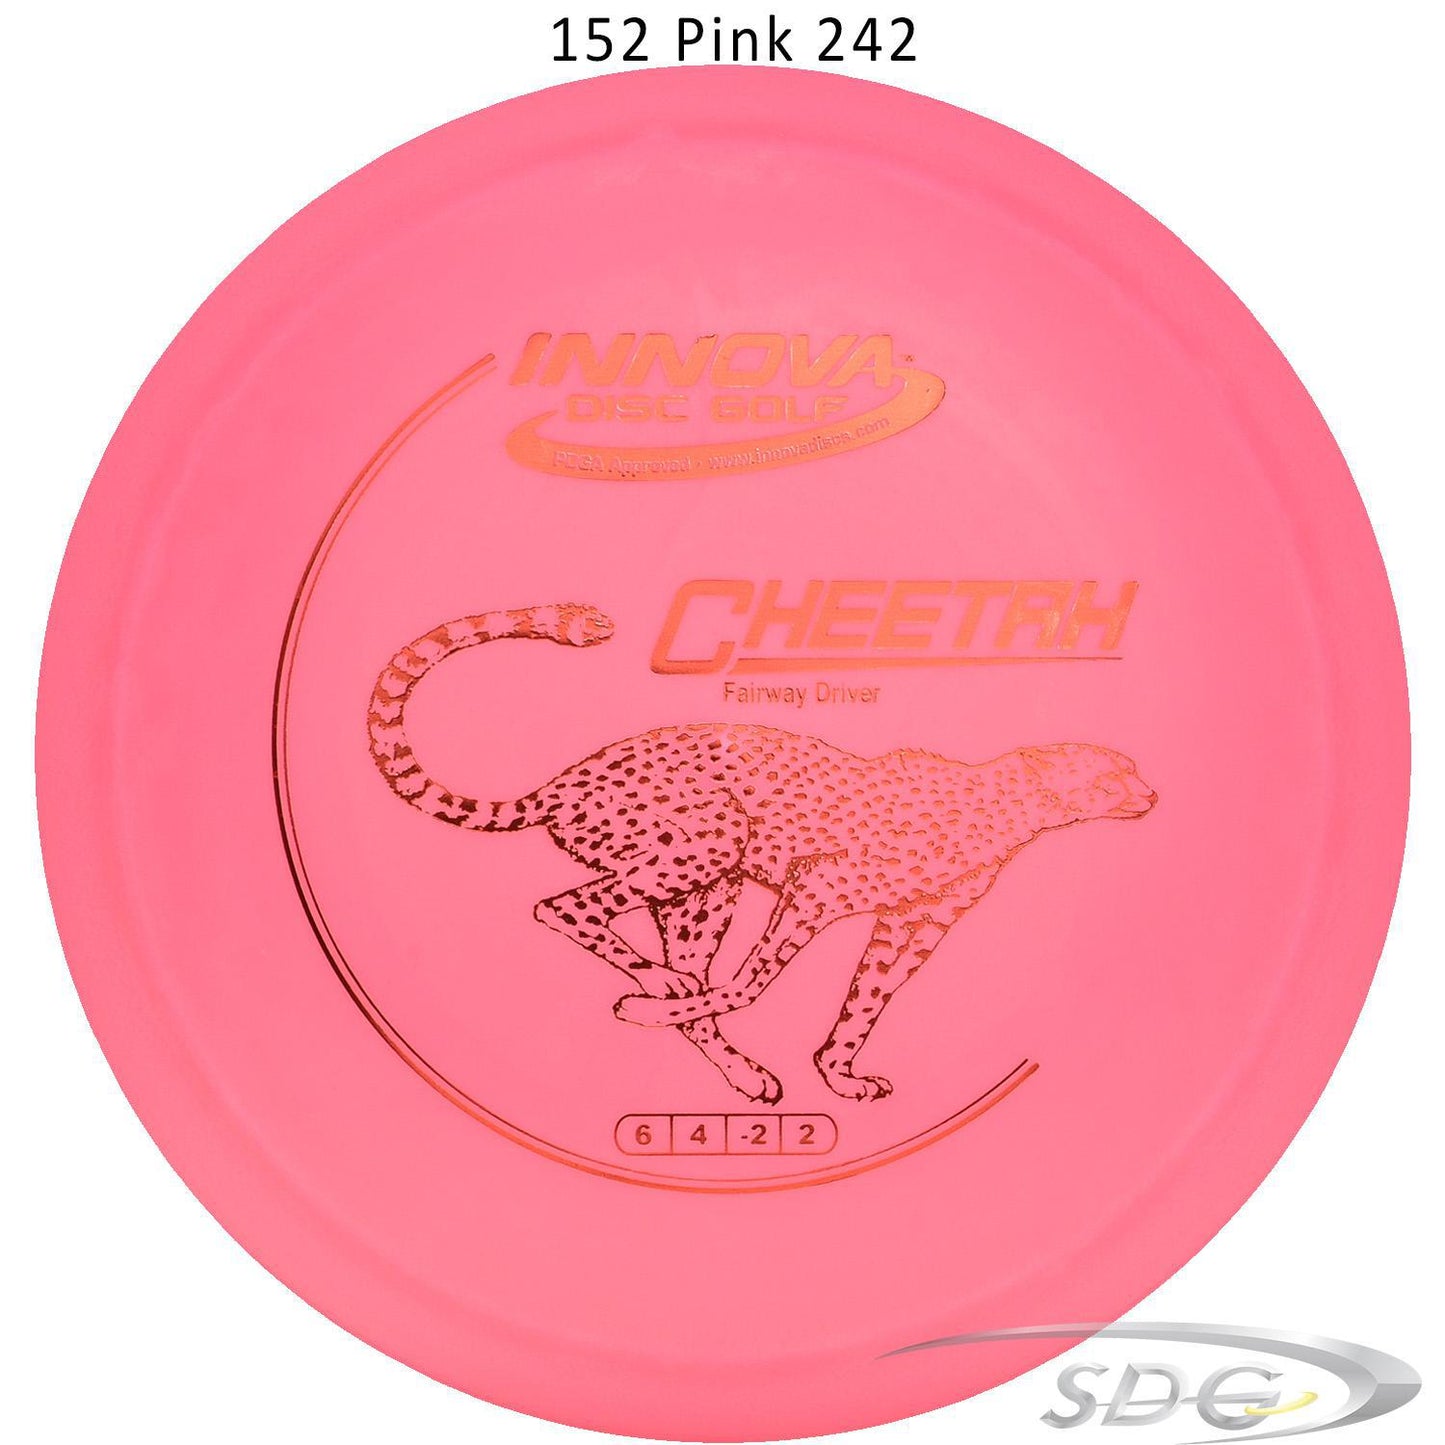 innova-dx-cheetah-disc-golf-fairway-driver 152 Pink 242 